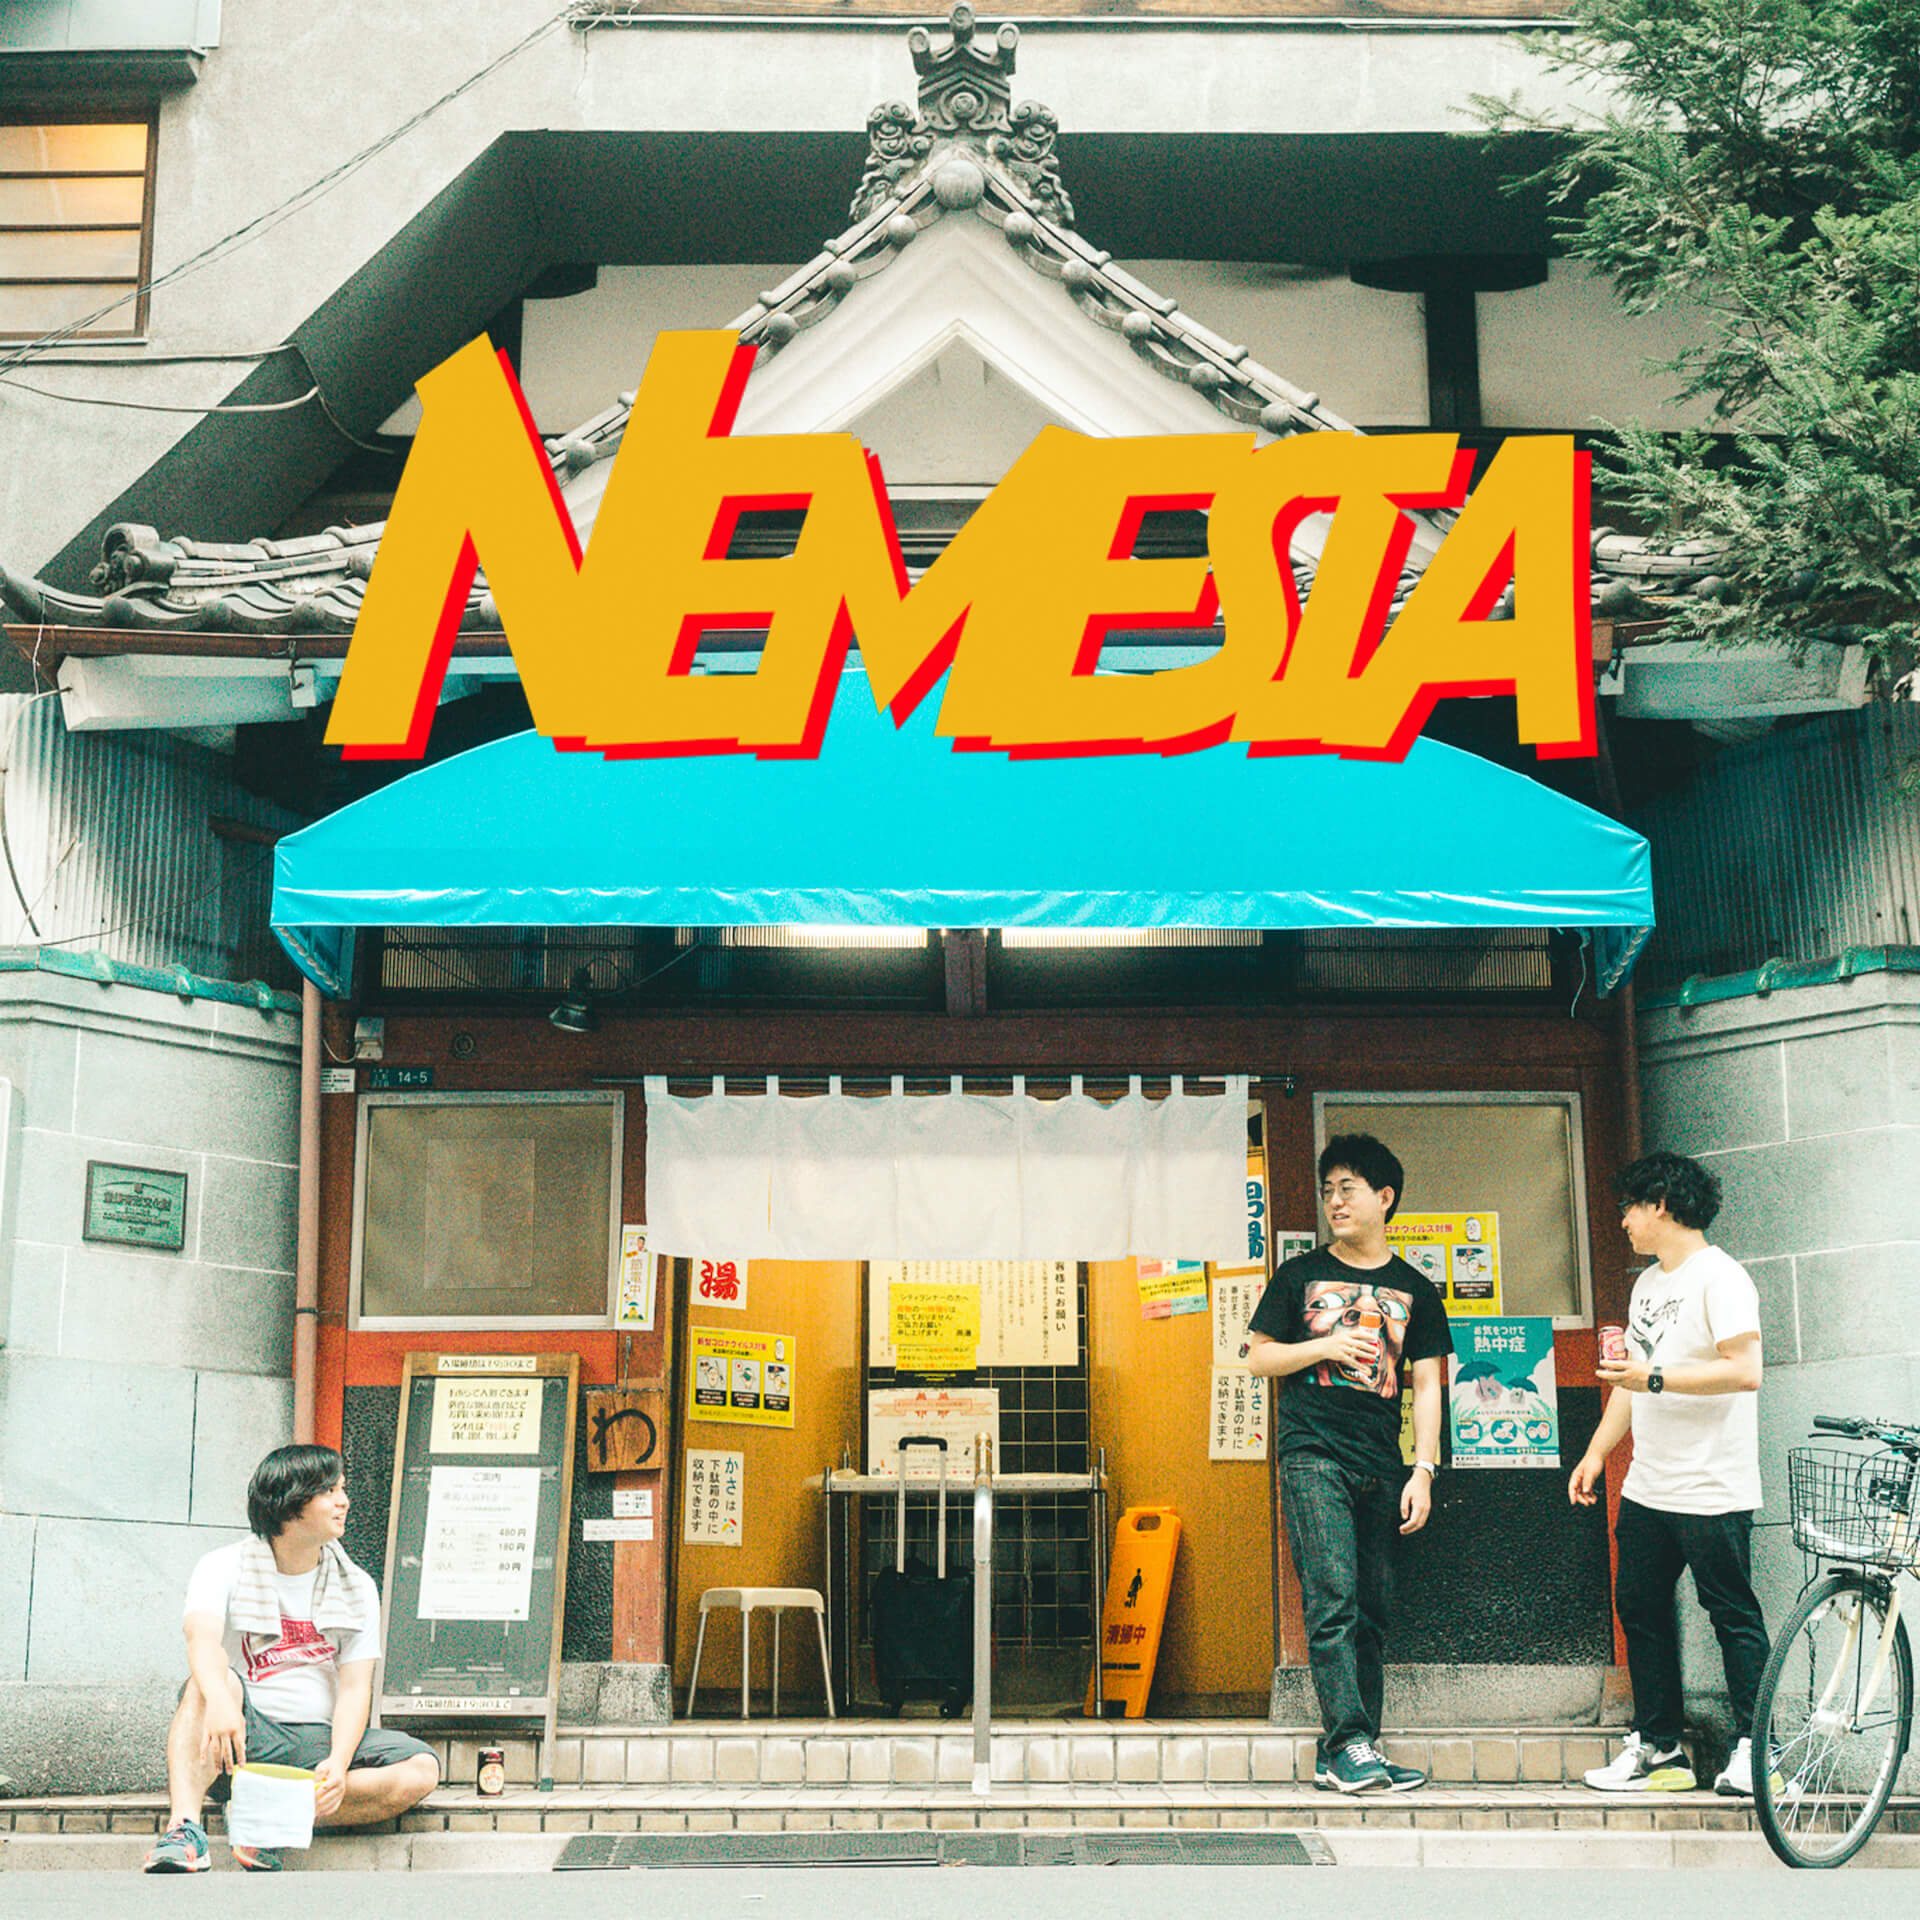 IN-KYA in Canada、 新曲「Nemesia」をリリース｜就職と音楽活動の狭間で揺れる心をスケッチしたメロウなナンバー music220906-inkya-incanada1